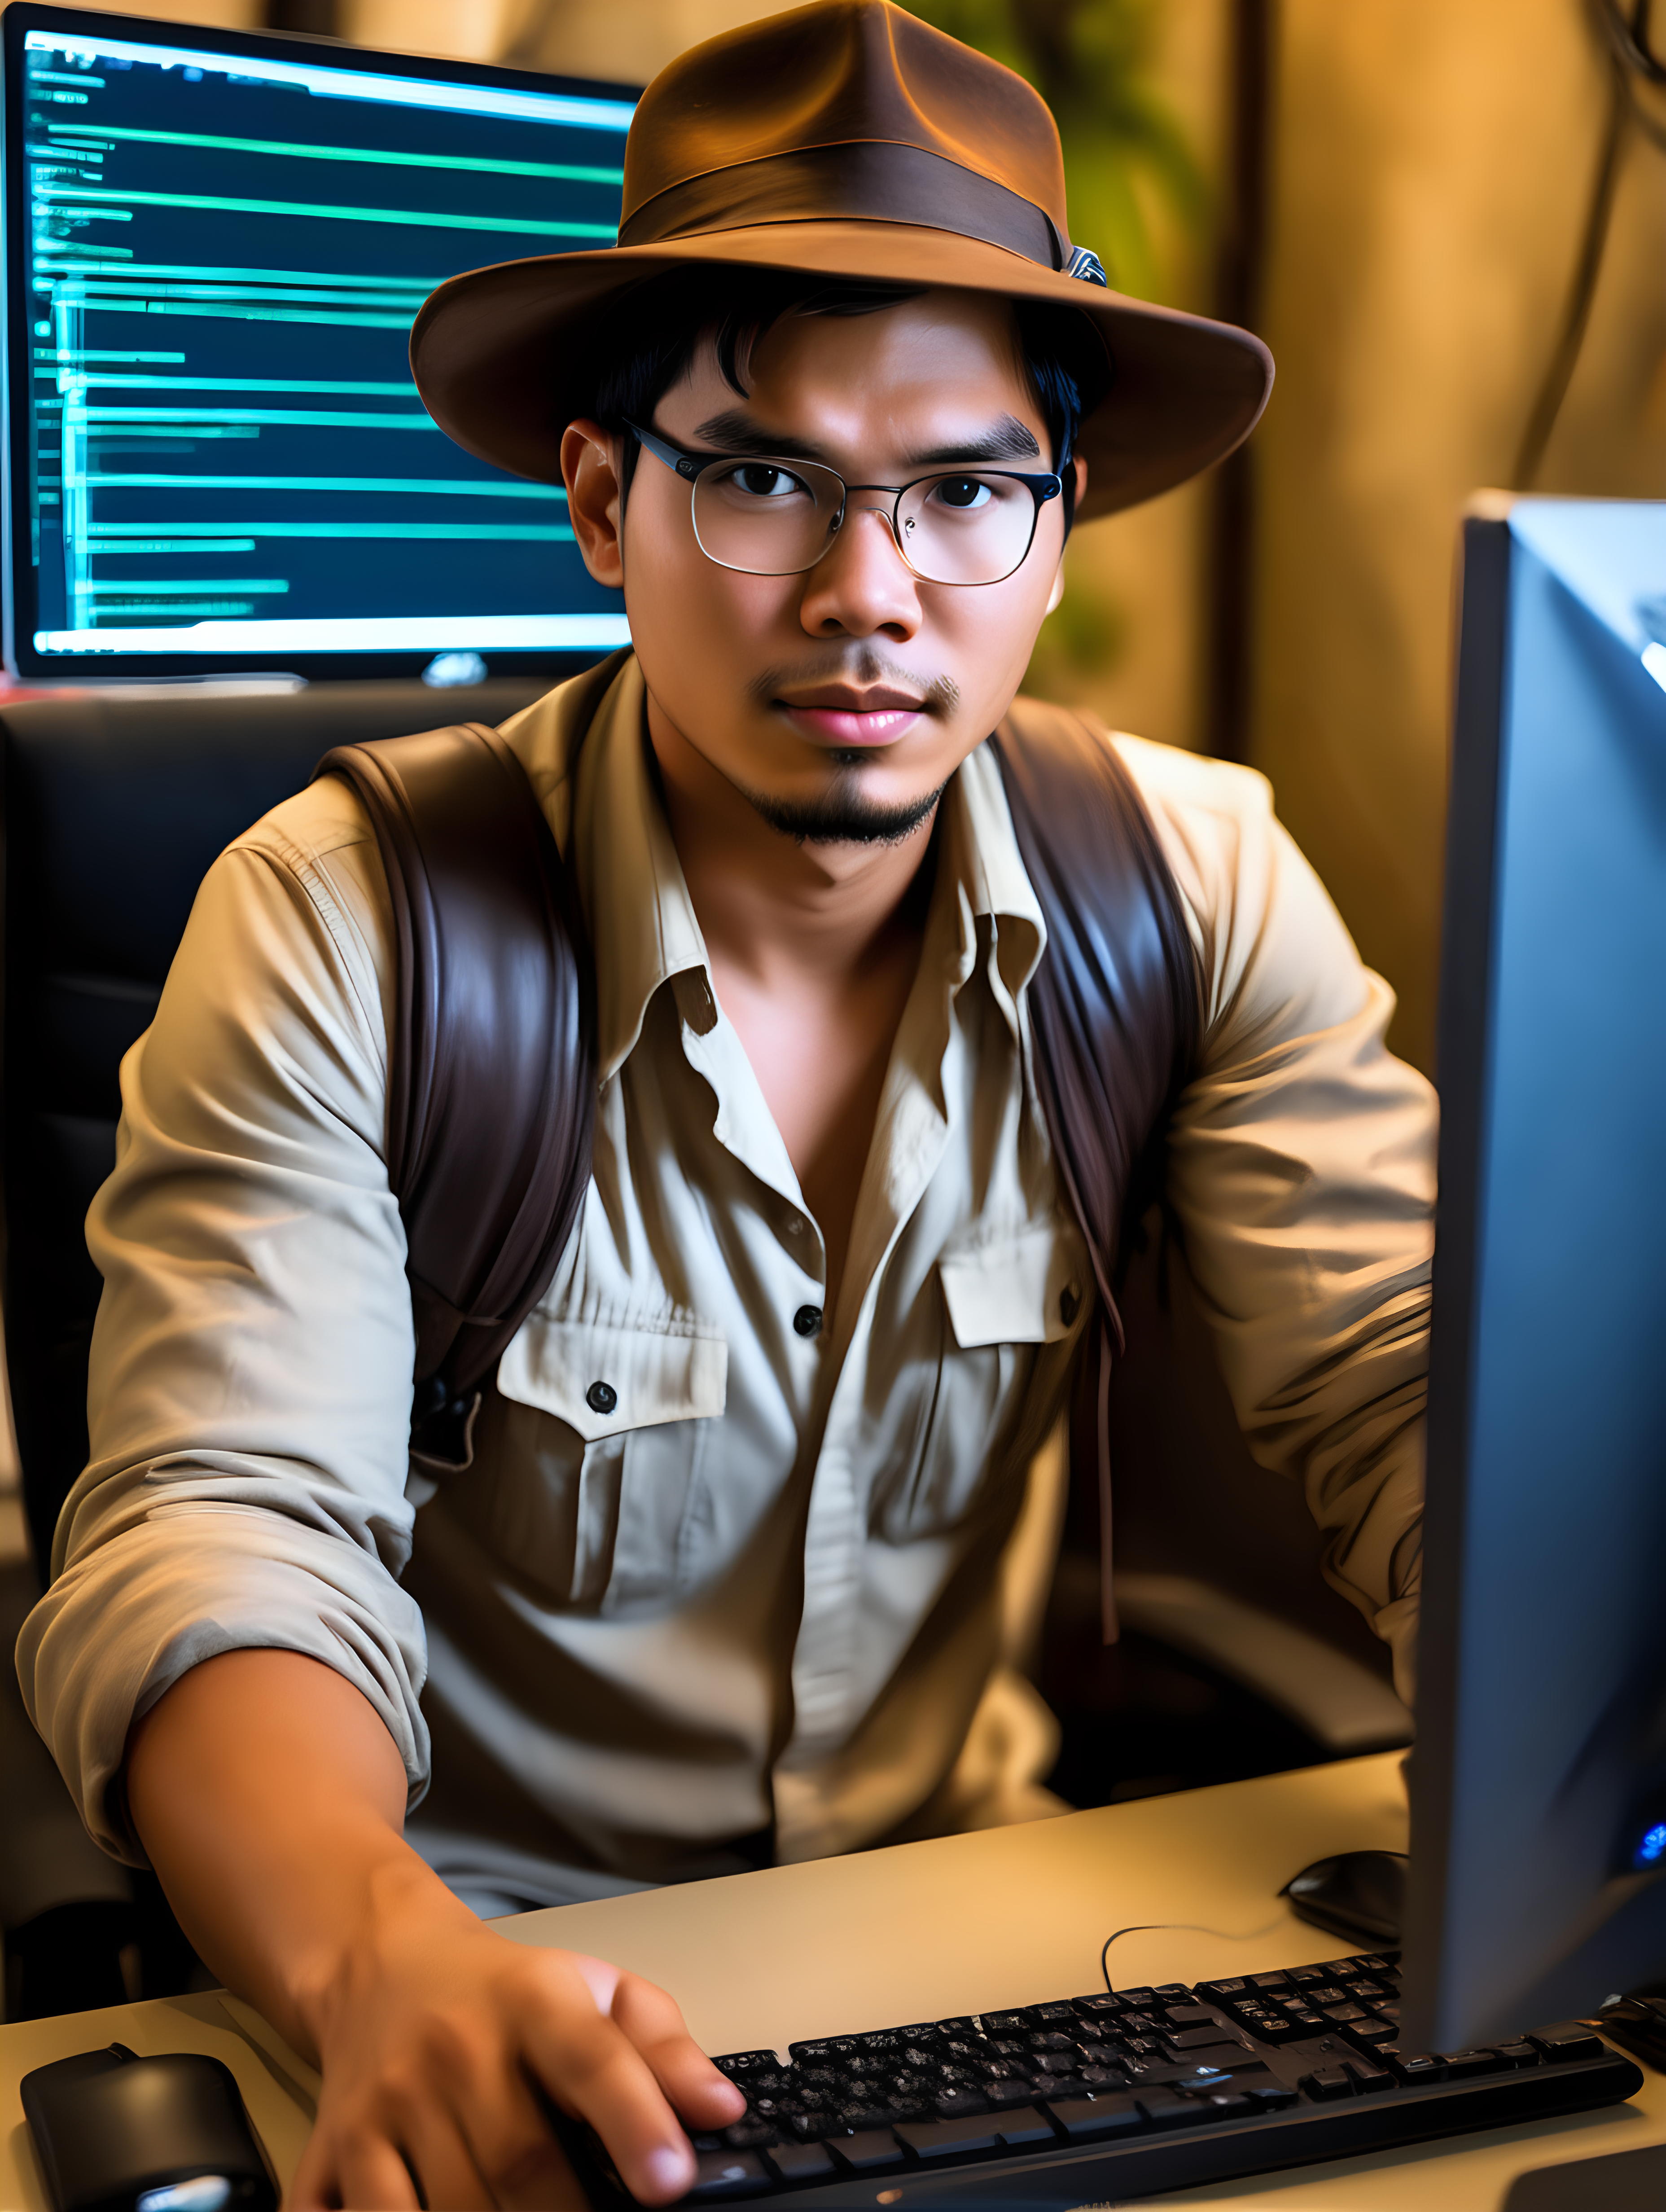 Good looking filipino Software developer working at his computer dressed like indiana jones

